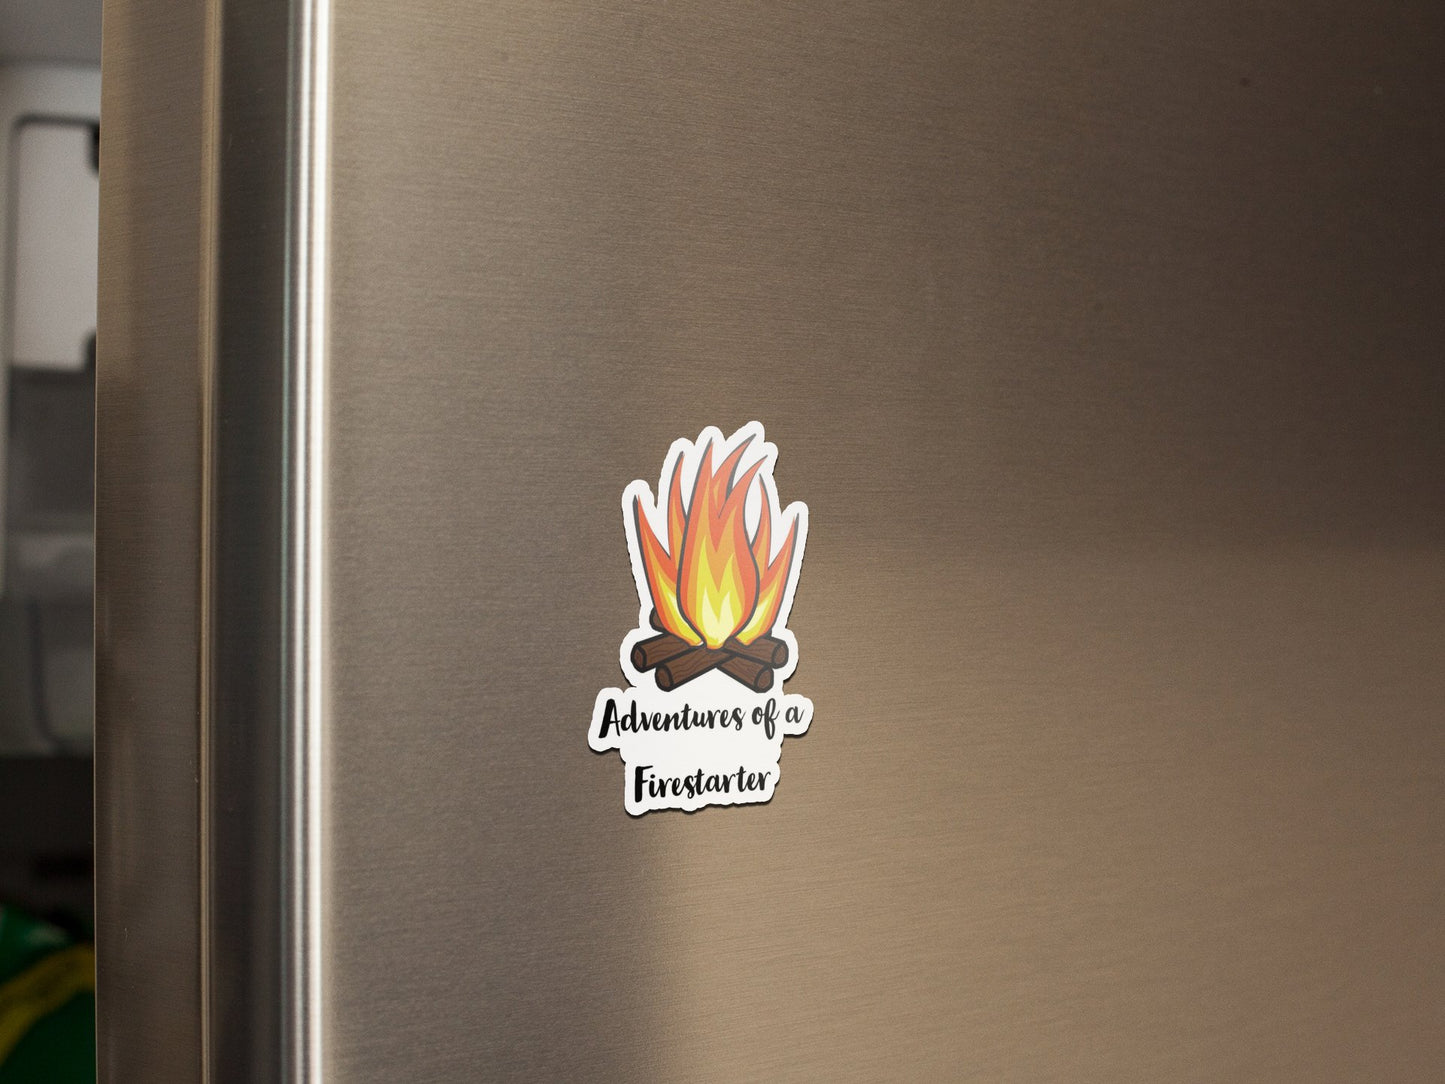 Adventures of a Firestarter - refrigerator magnet